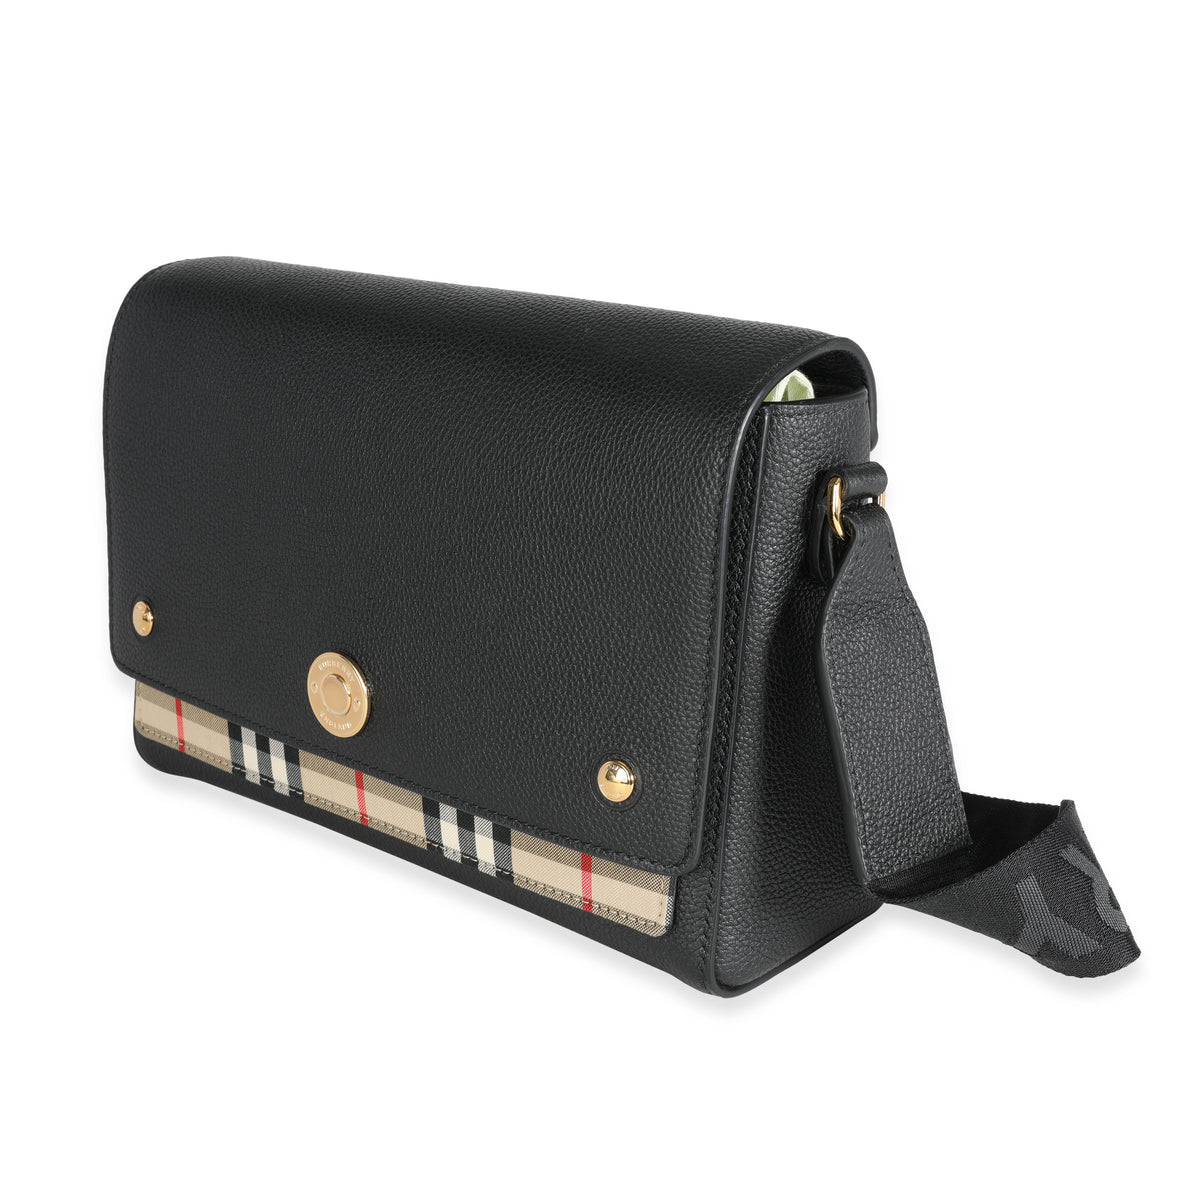 Burberry Note Medium Leather & Vintage Check Crossbody Bag Black